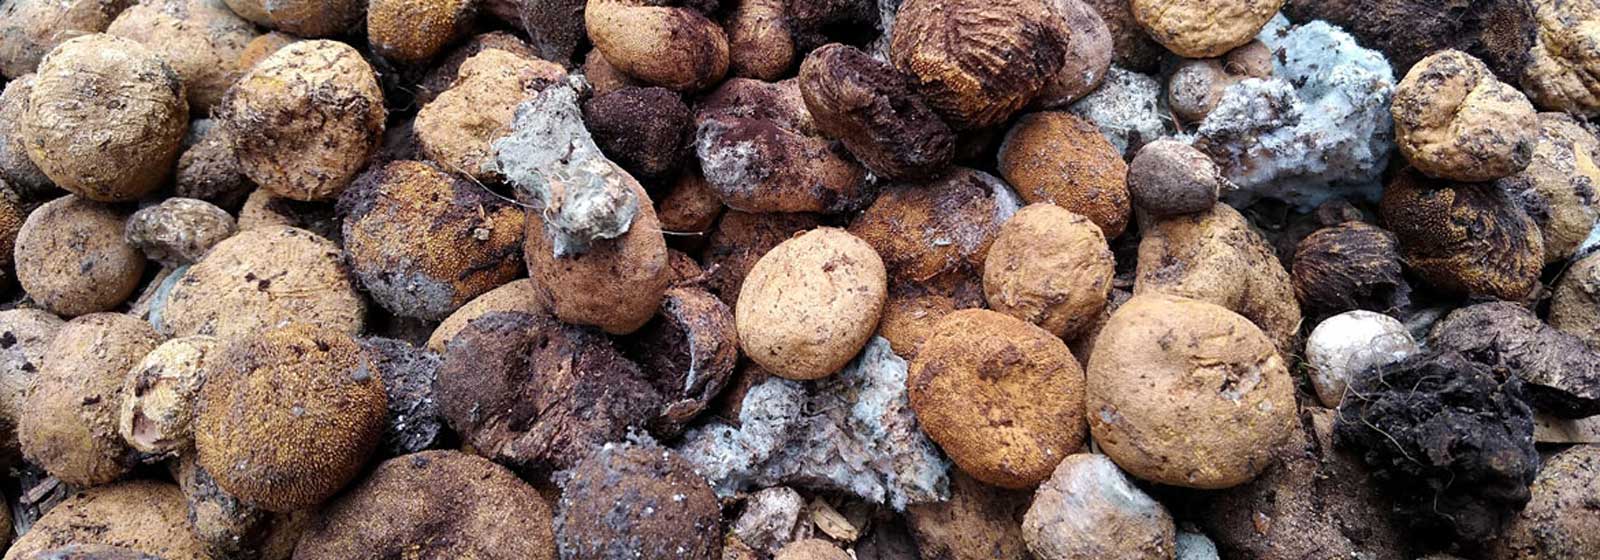 A close-up view of the Elaphomyces truffle mushrooms Emelia found